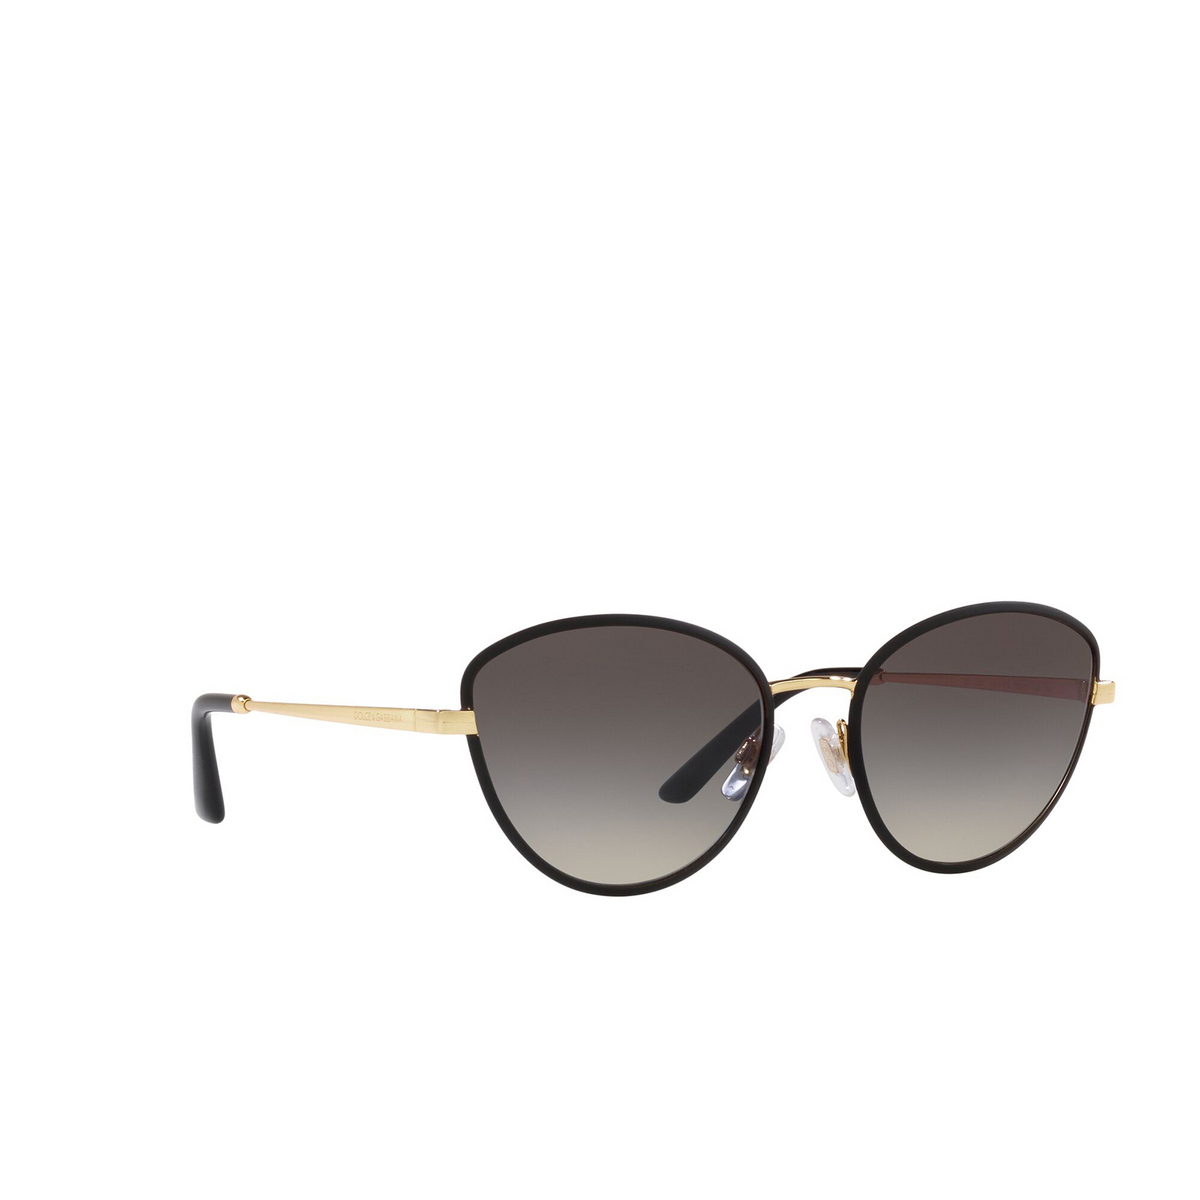 Dolce & Gabbana® Butterfly Sunglasses: DG2280 color Gold / Matte Black 13118G - three-quarters view.